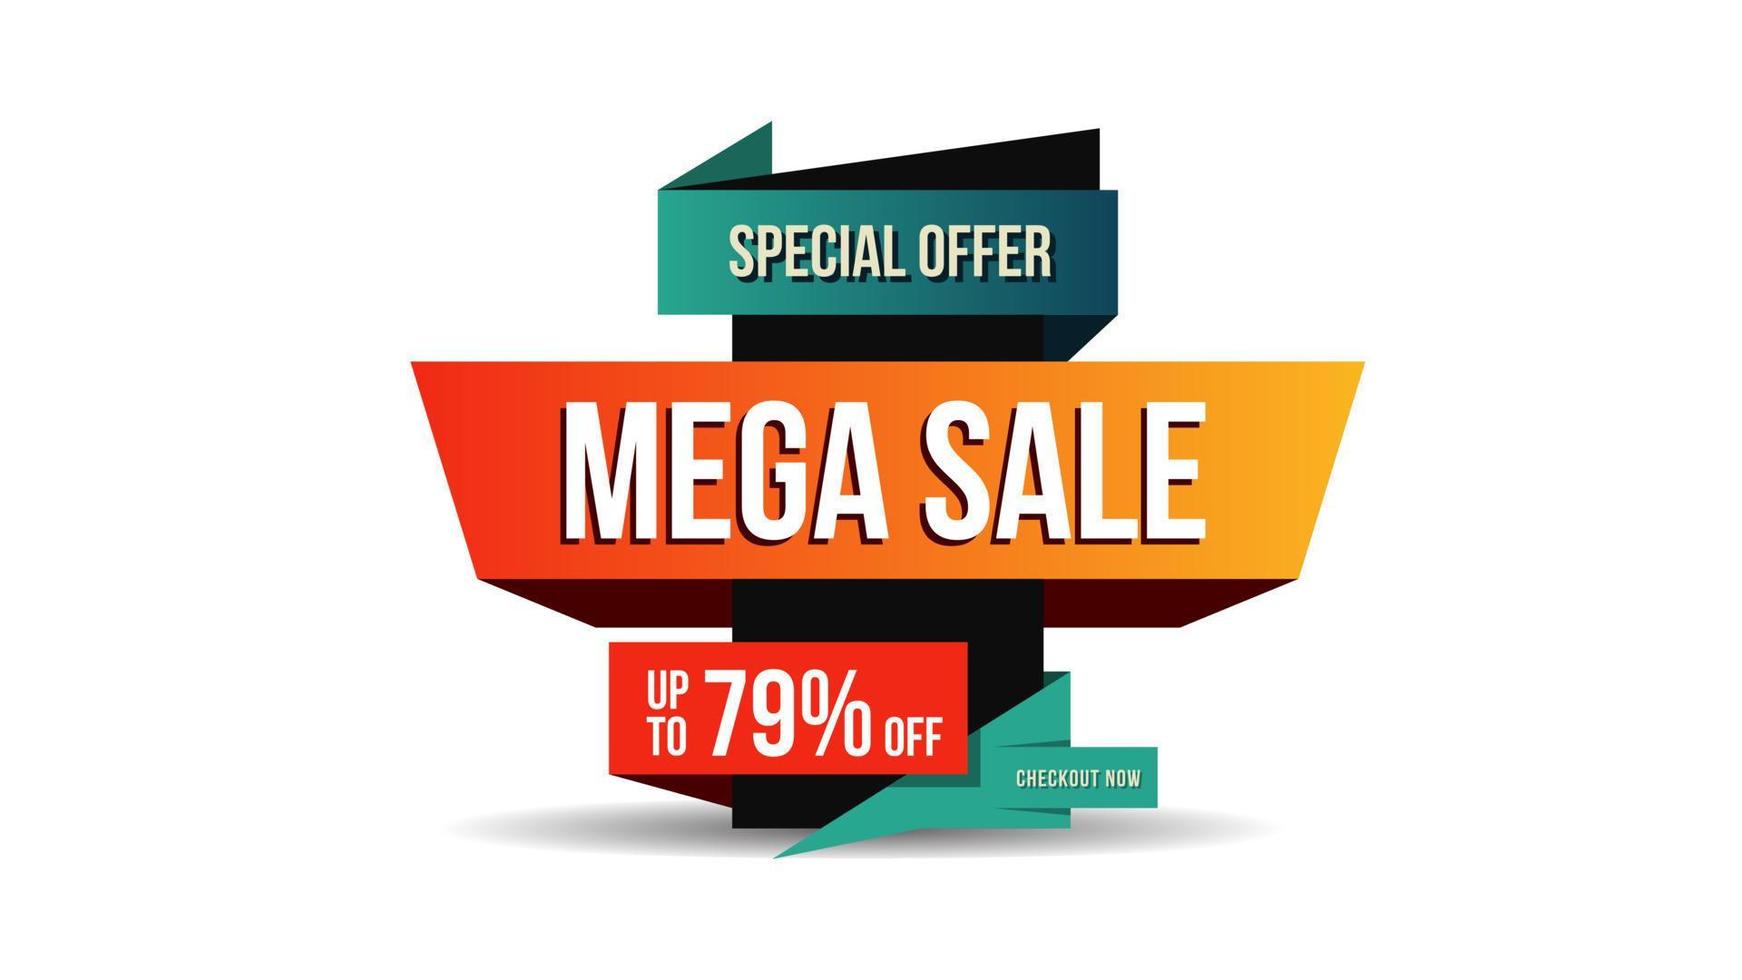 Mega sale special offer. Paper style creative promotion template design for banner, poster, brochure vector